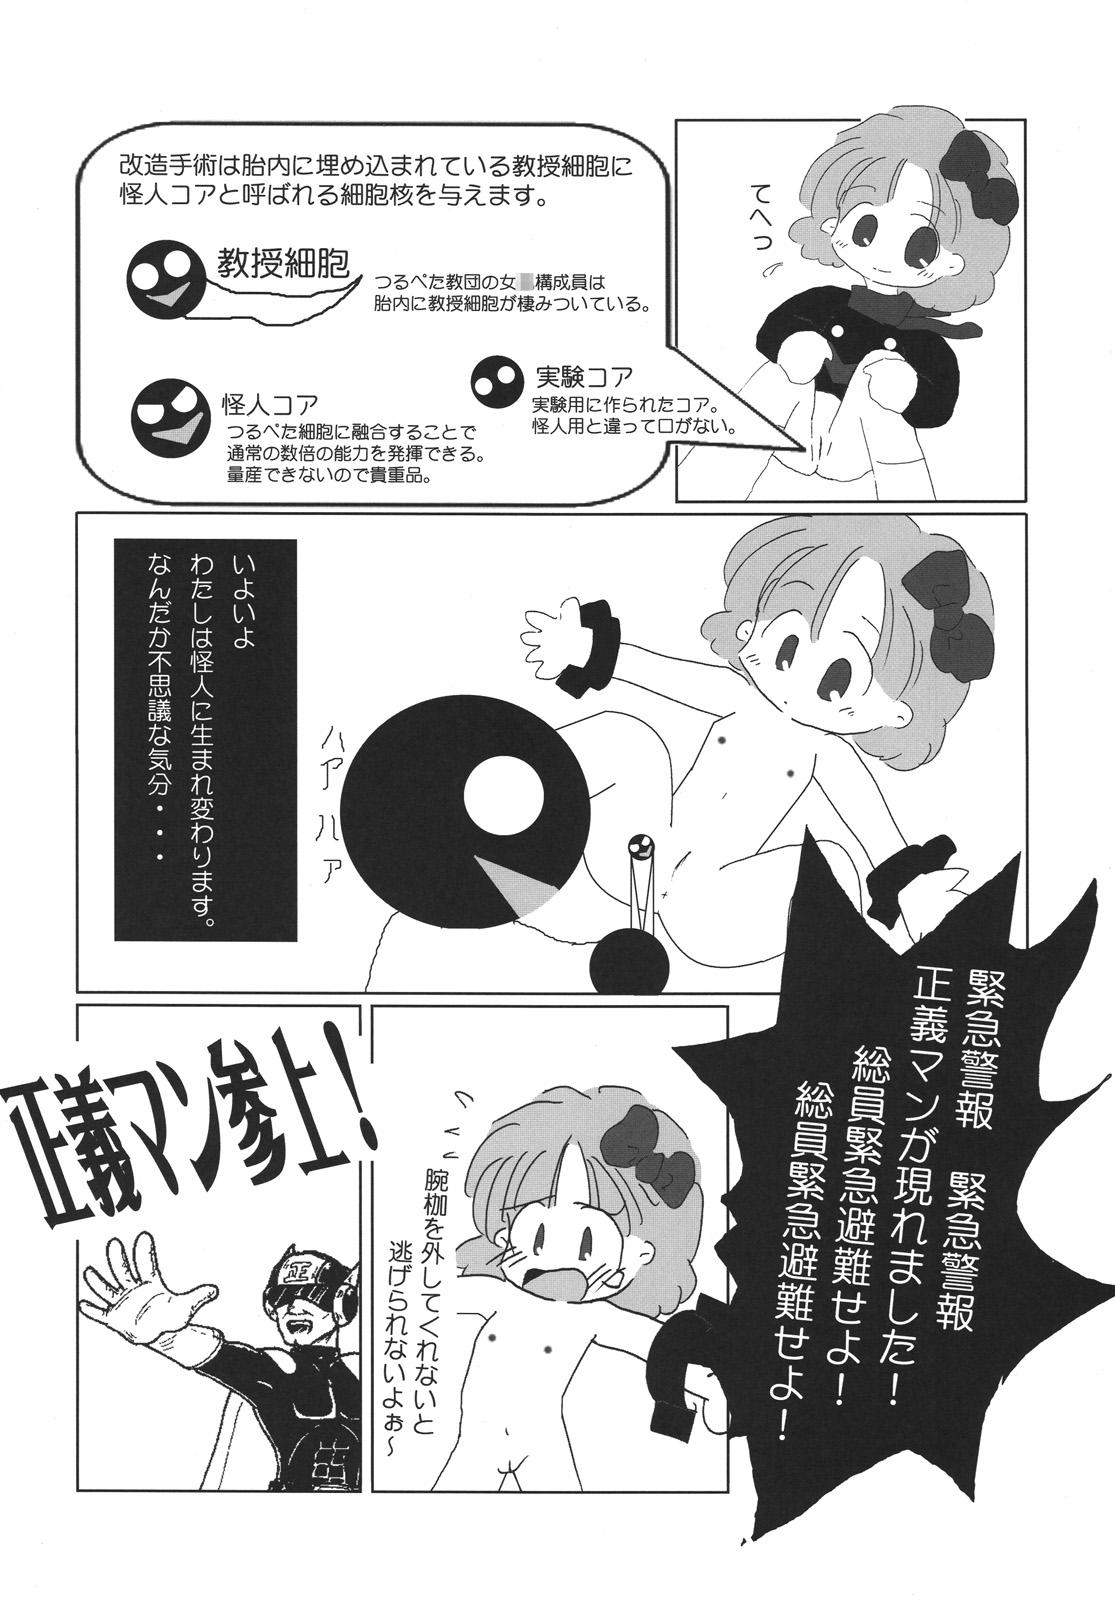 Peeing Tsurupeta Kenkyuu Houkokusho "Kakyuu Sentou In no Isshou" - Turupeta Research Report Solo Female - Page 7